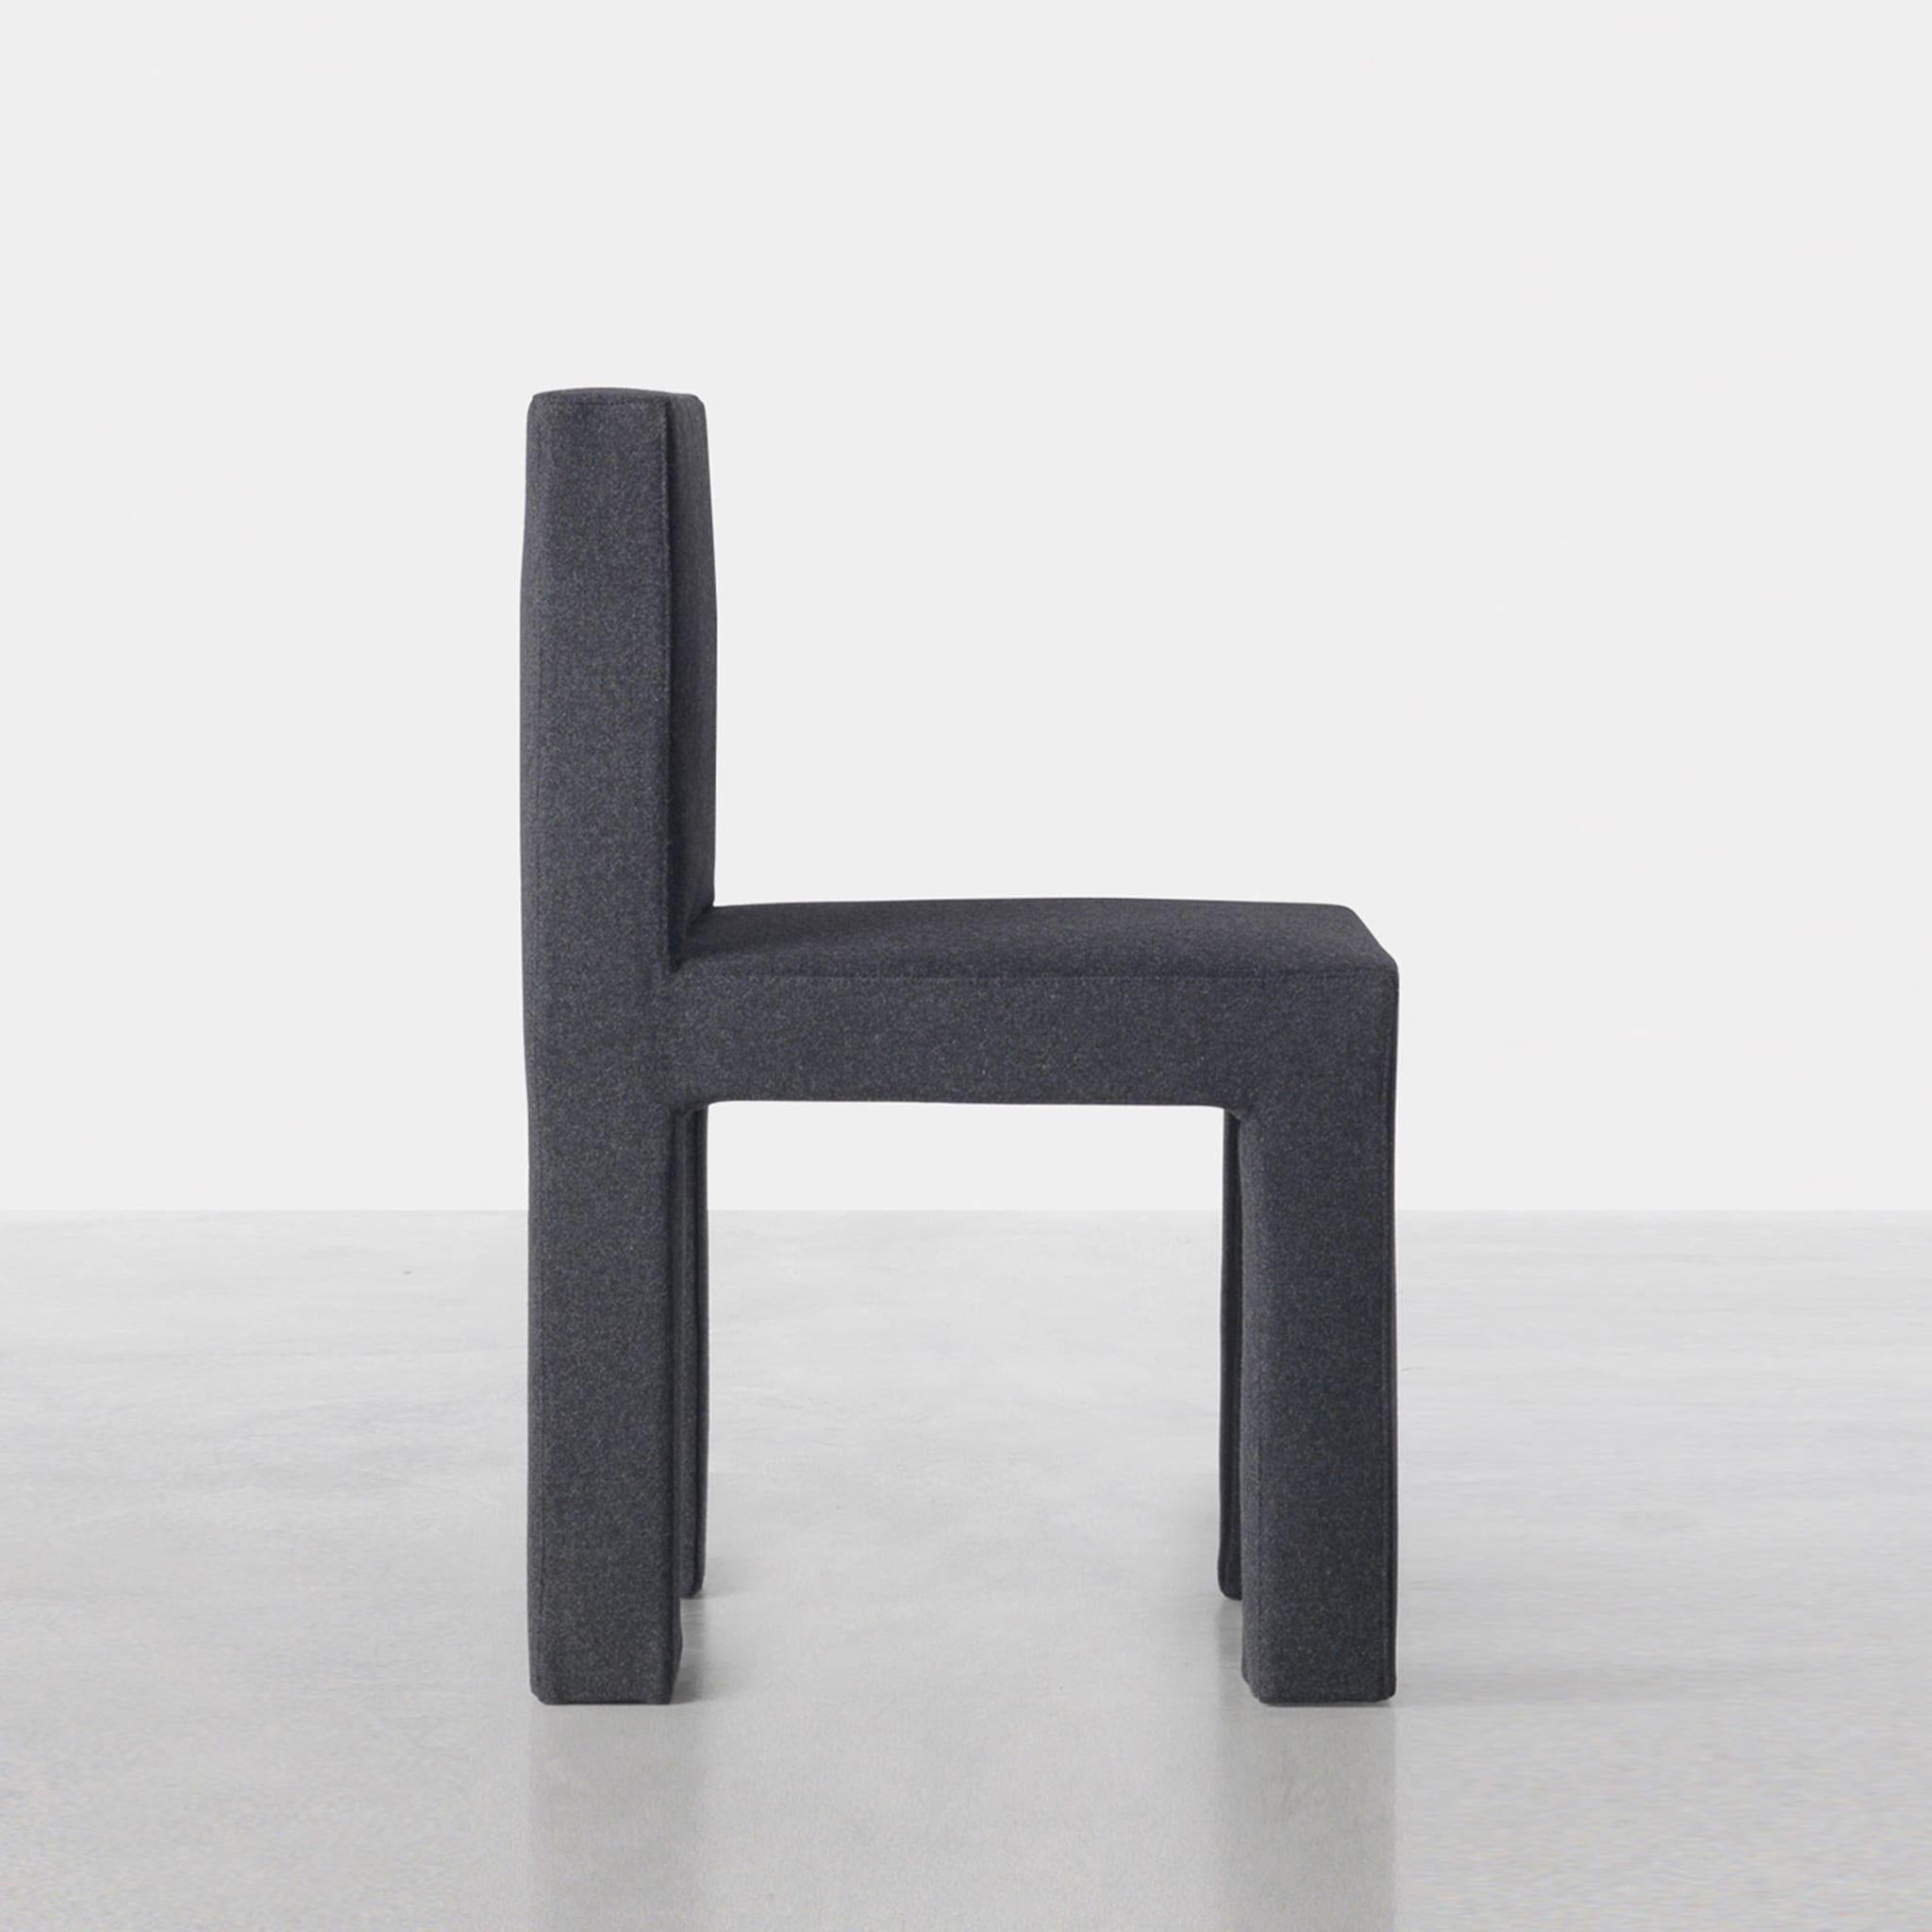 Quadrata Gray Chair by Dainelli Studio - Alternative view 3